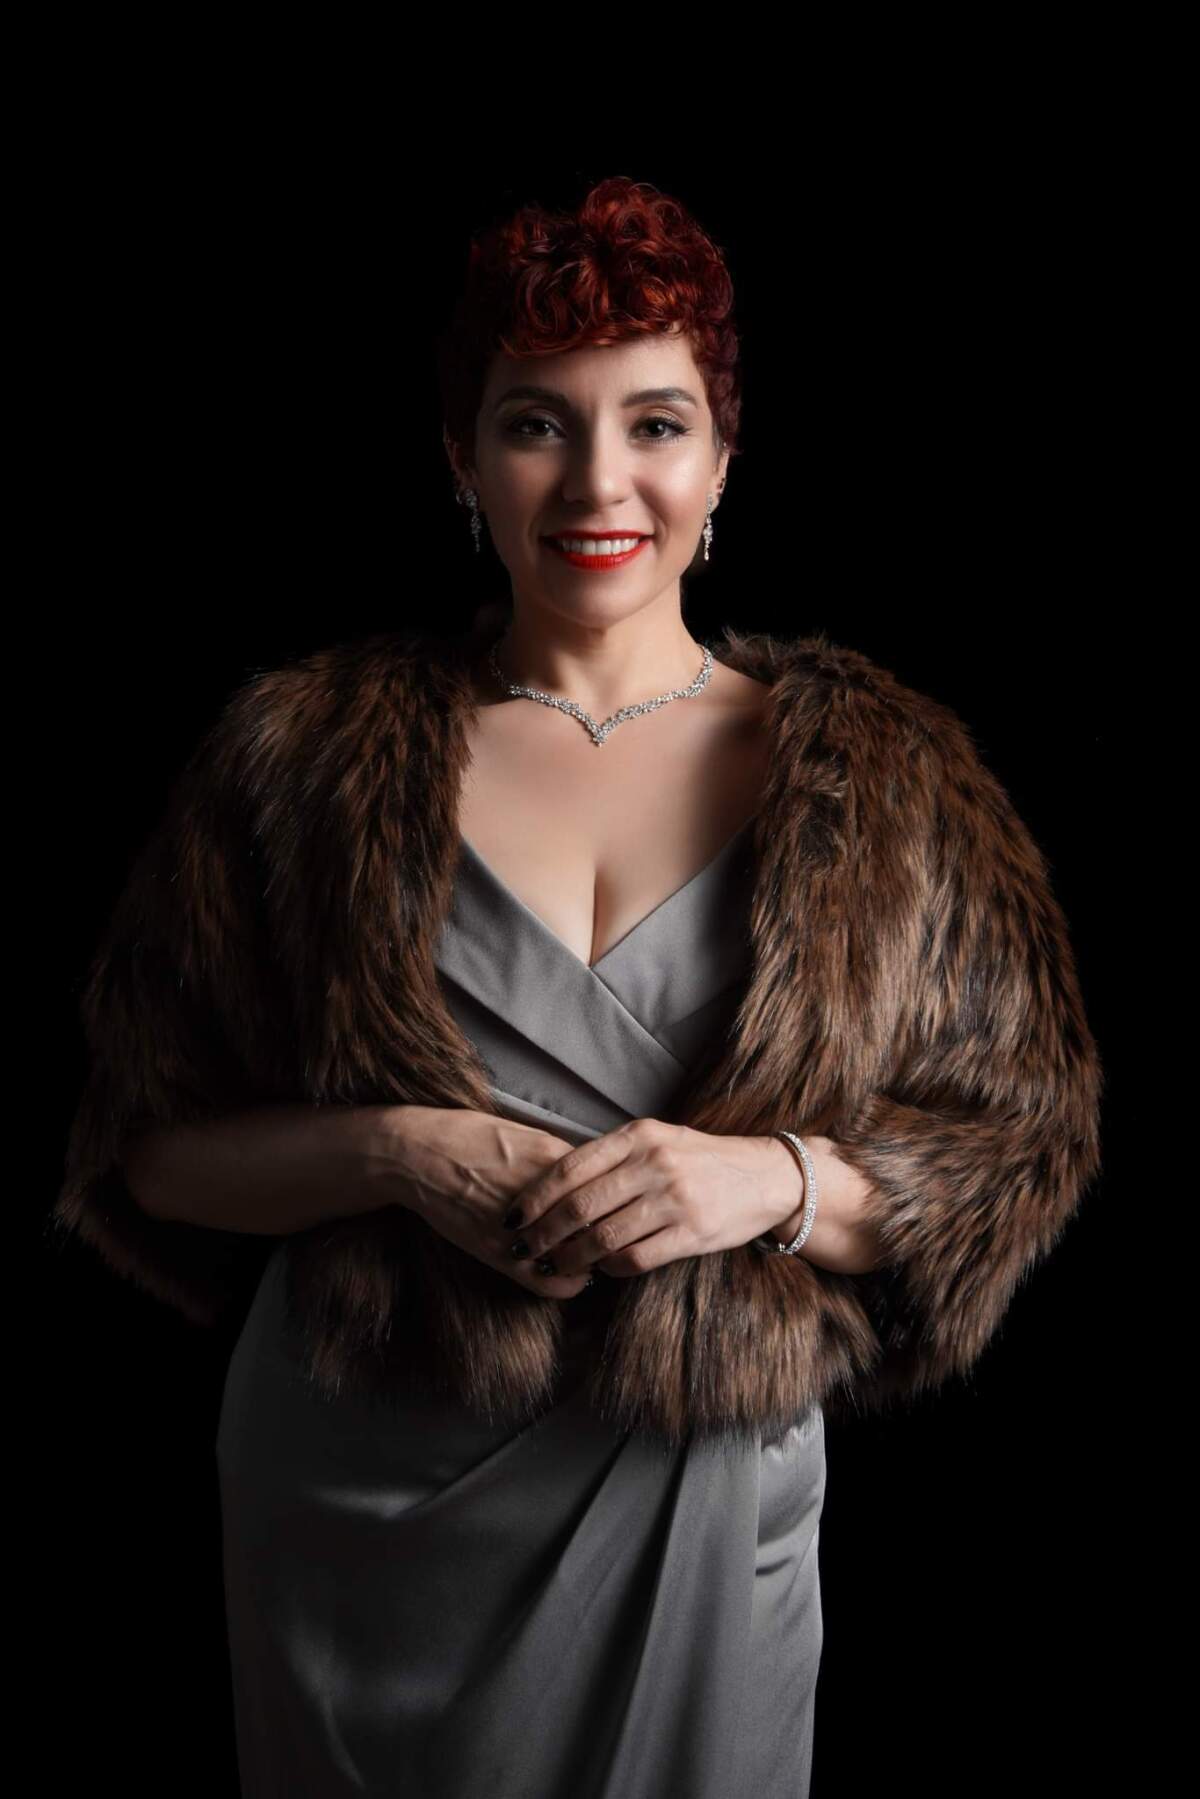 Norma Navarrete will perform as part of the La Jolla Community Center's “Opera Wednesday” on Nov. 9.